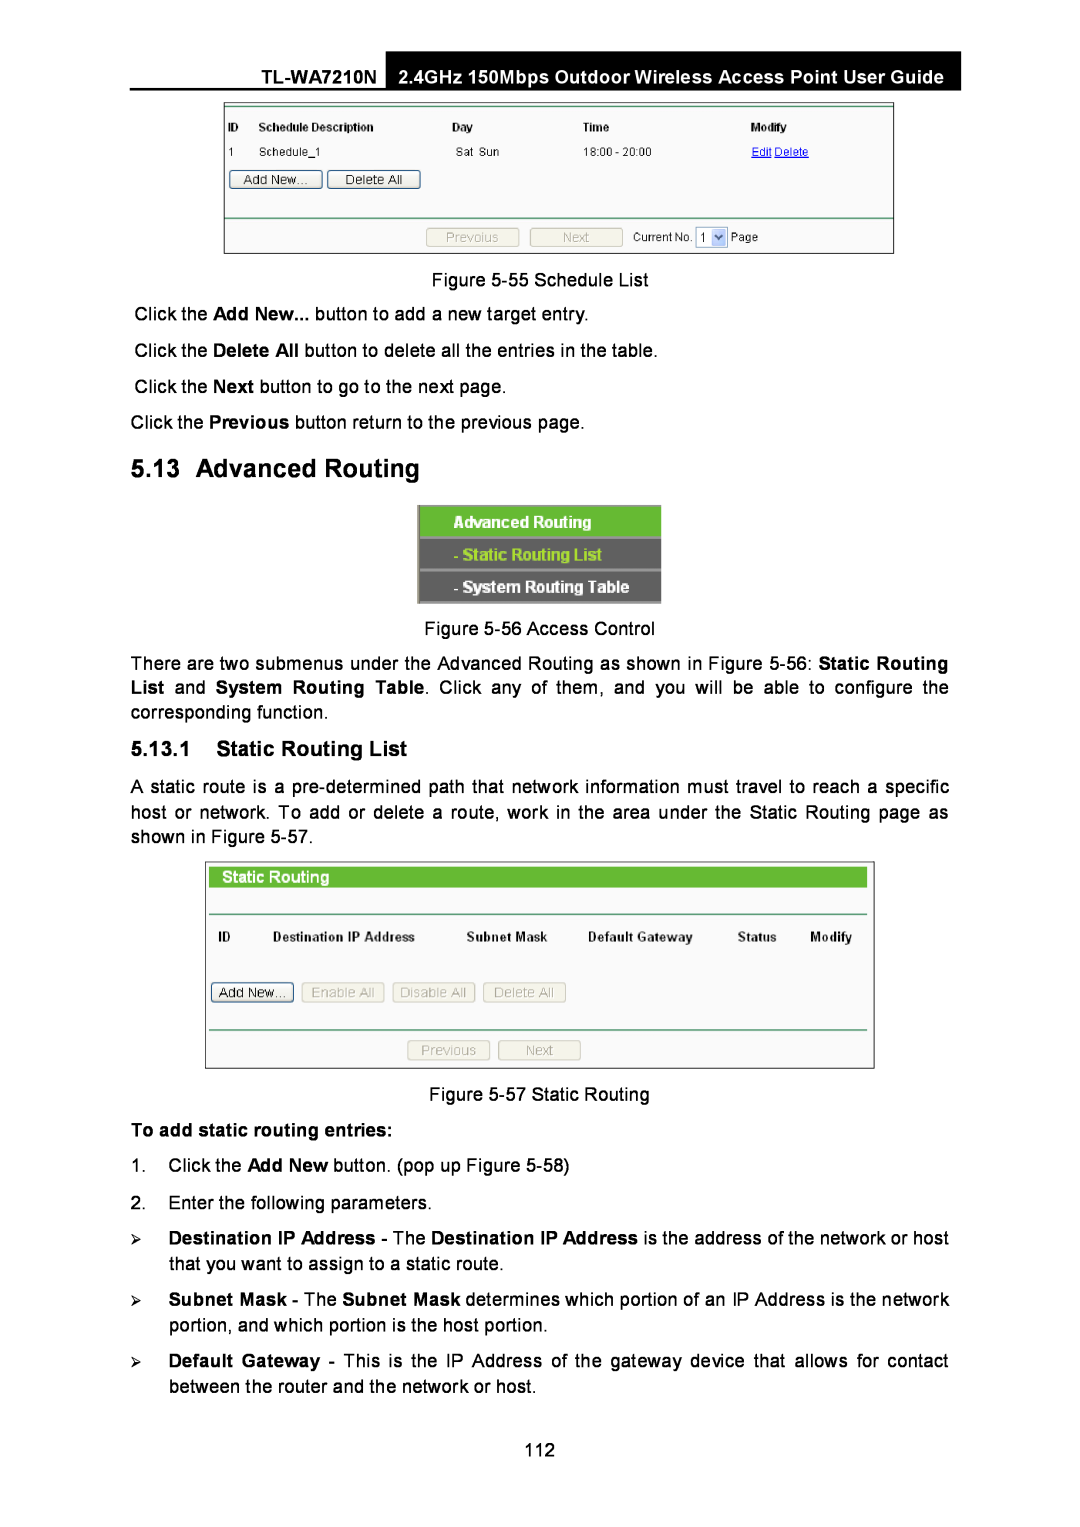 TP-Link TL-WA7210N manual Advanced Routing, Static Routing List, To add static routing entries 